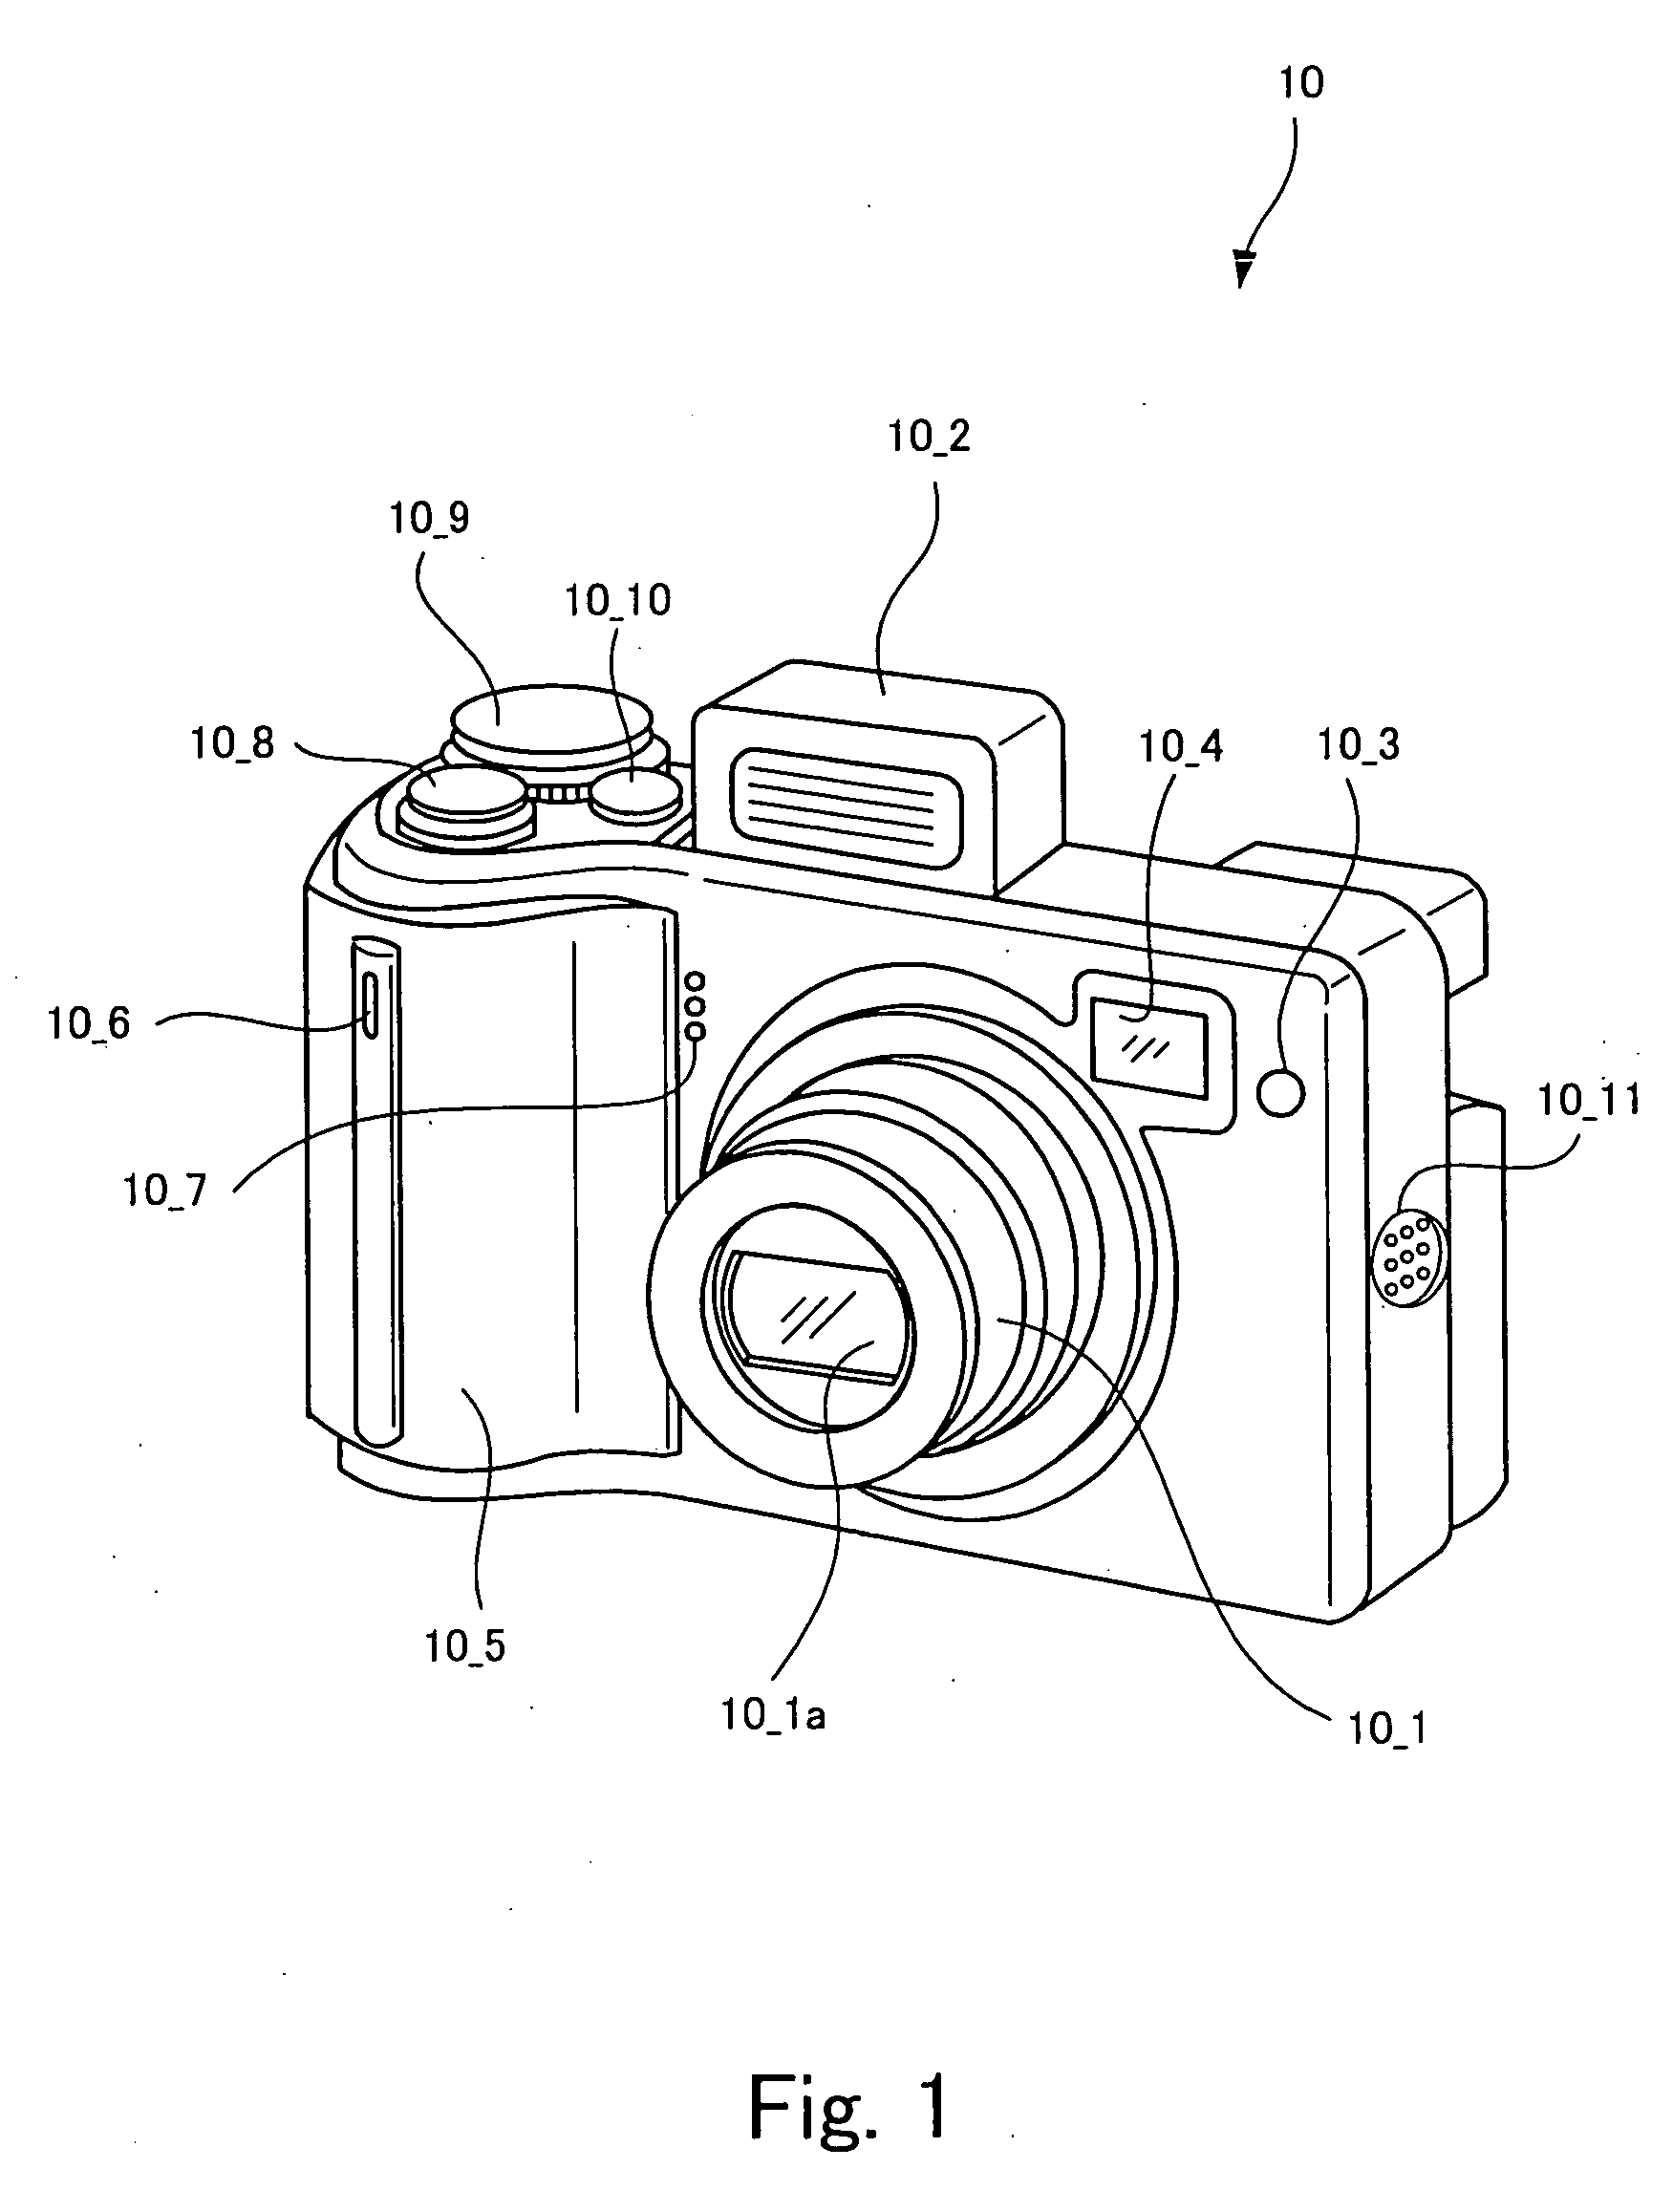 Image-taking device